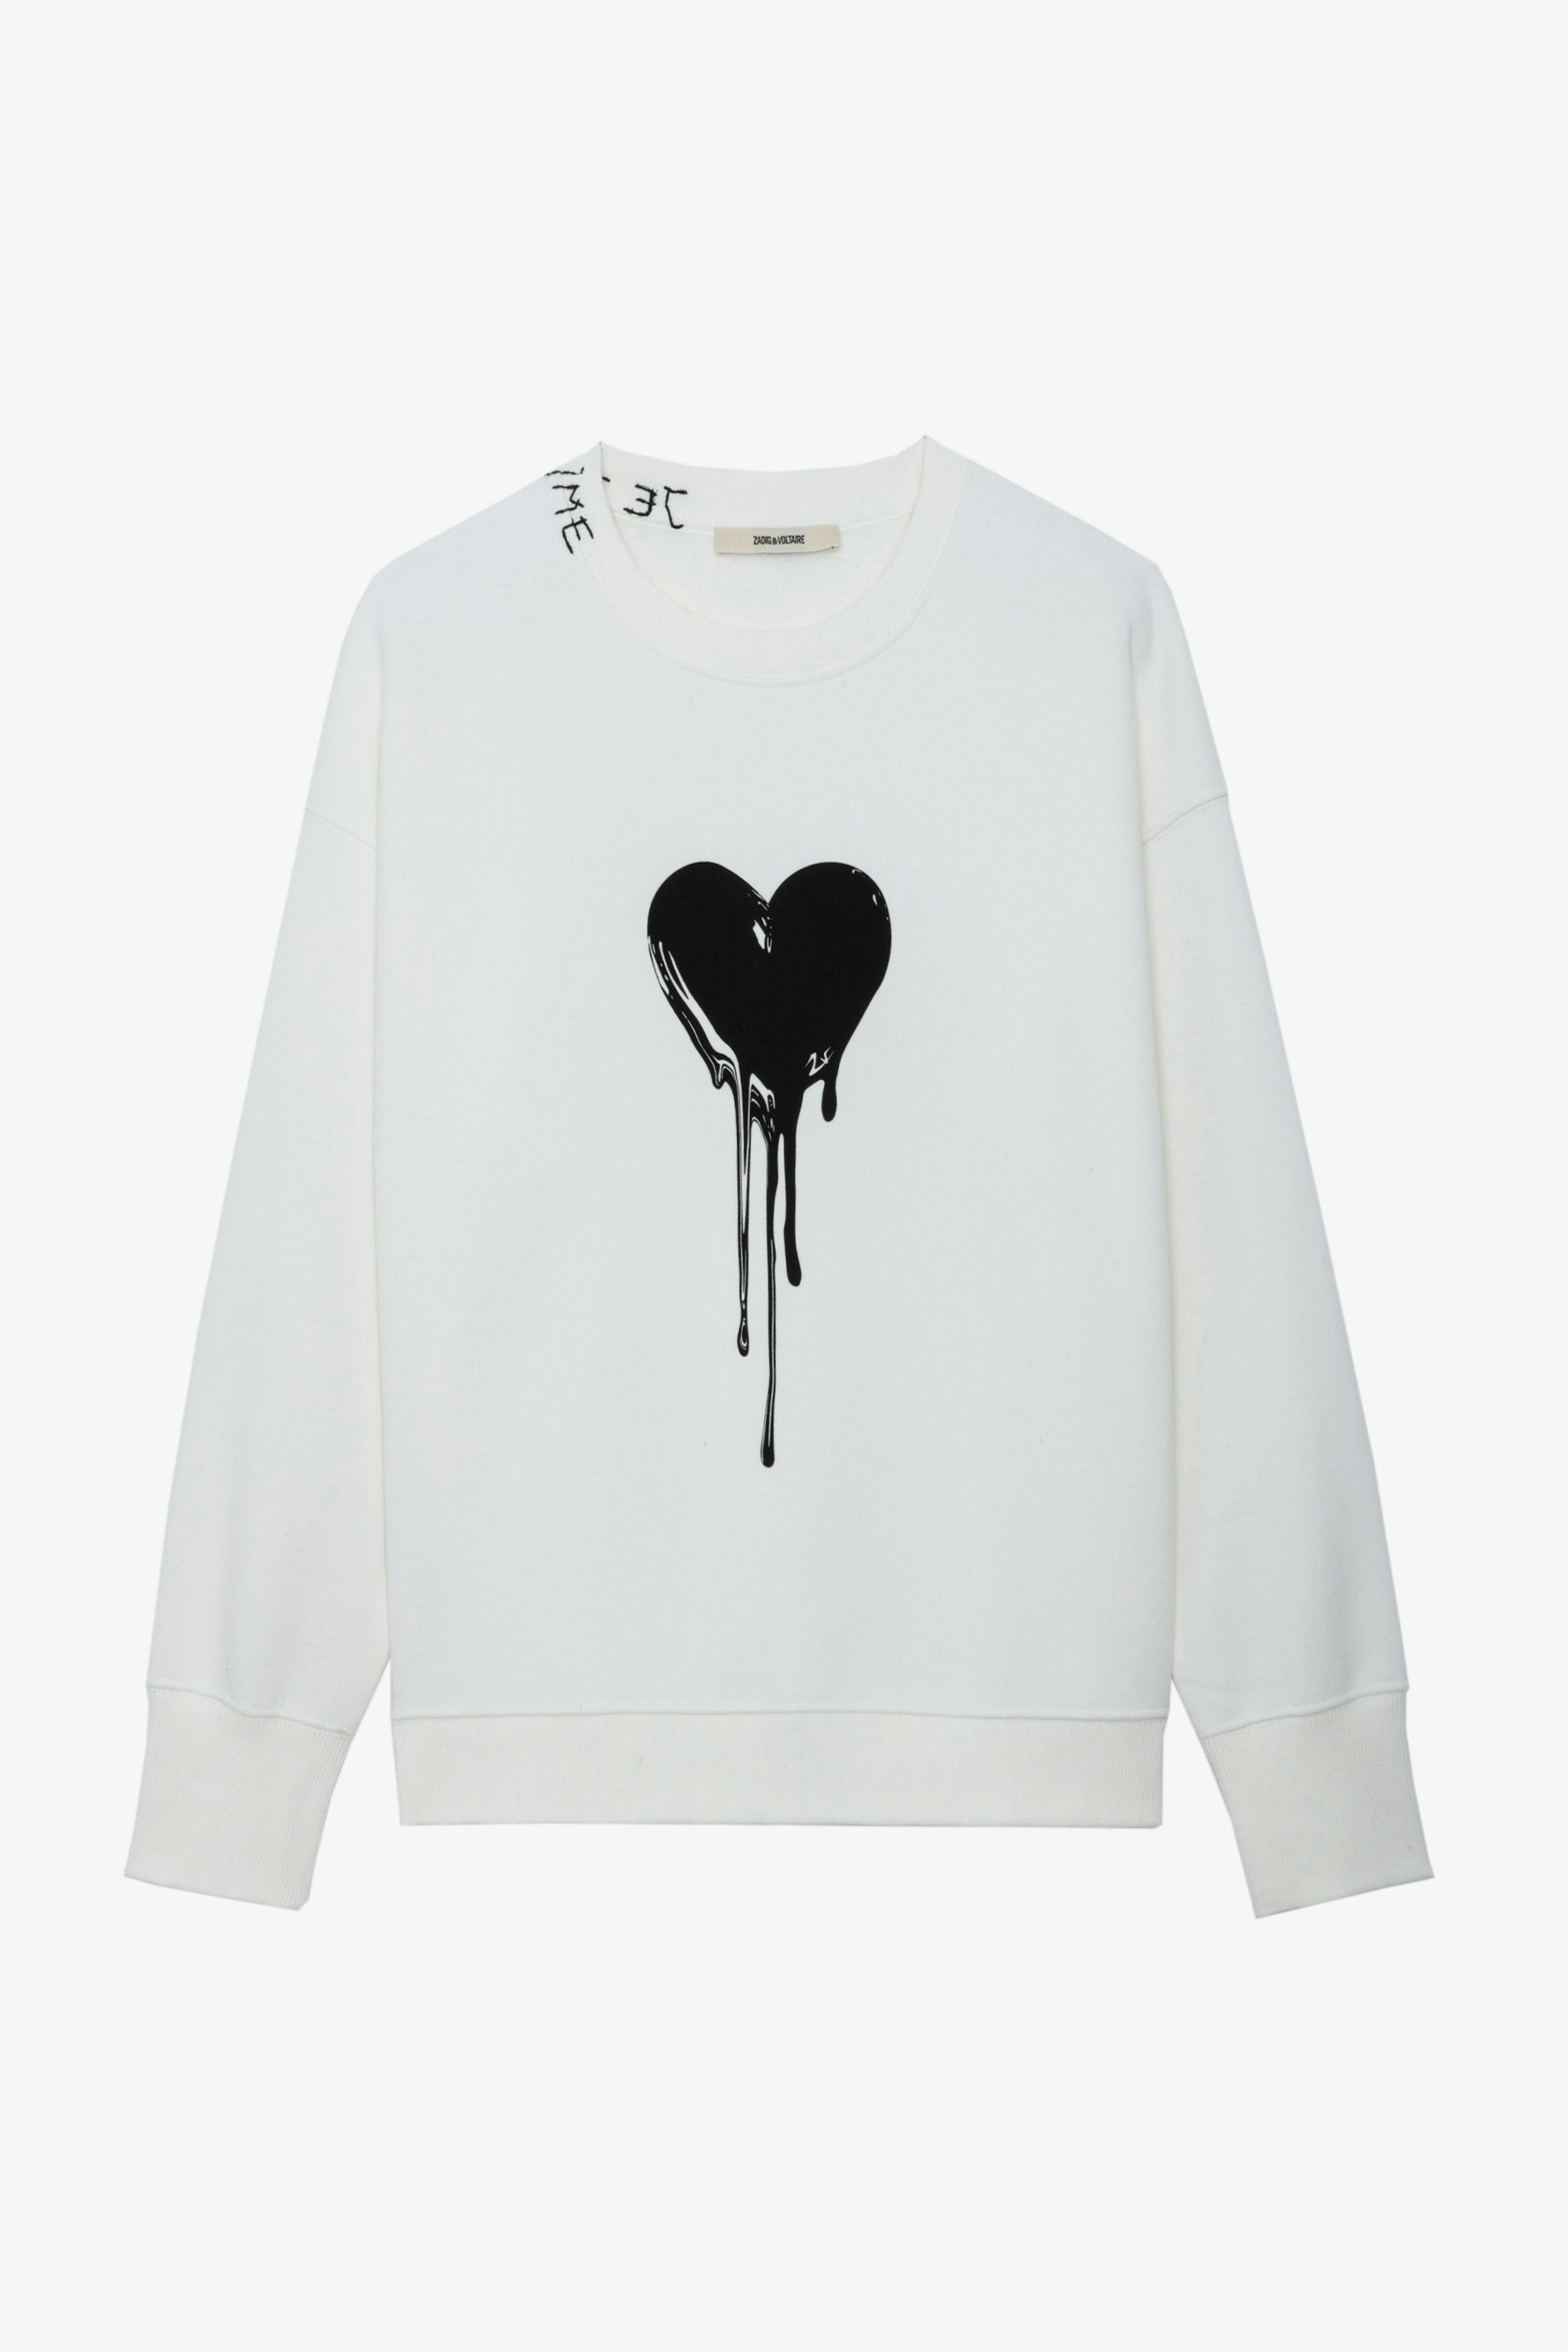 Oscar Heart Sweatshirt - Ecru long-sleeved sweatshirt with melting heart motif and slogan embroidery on the collar.